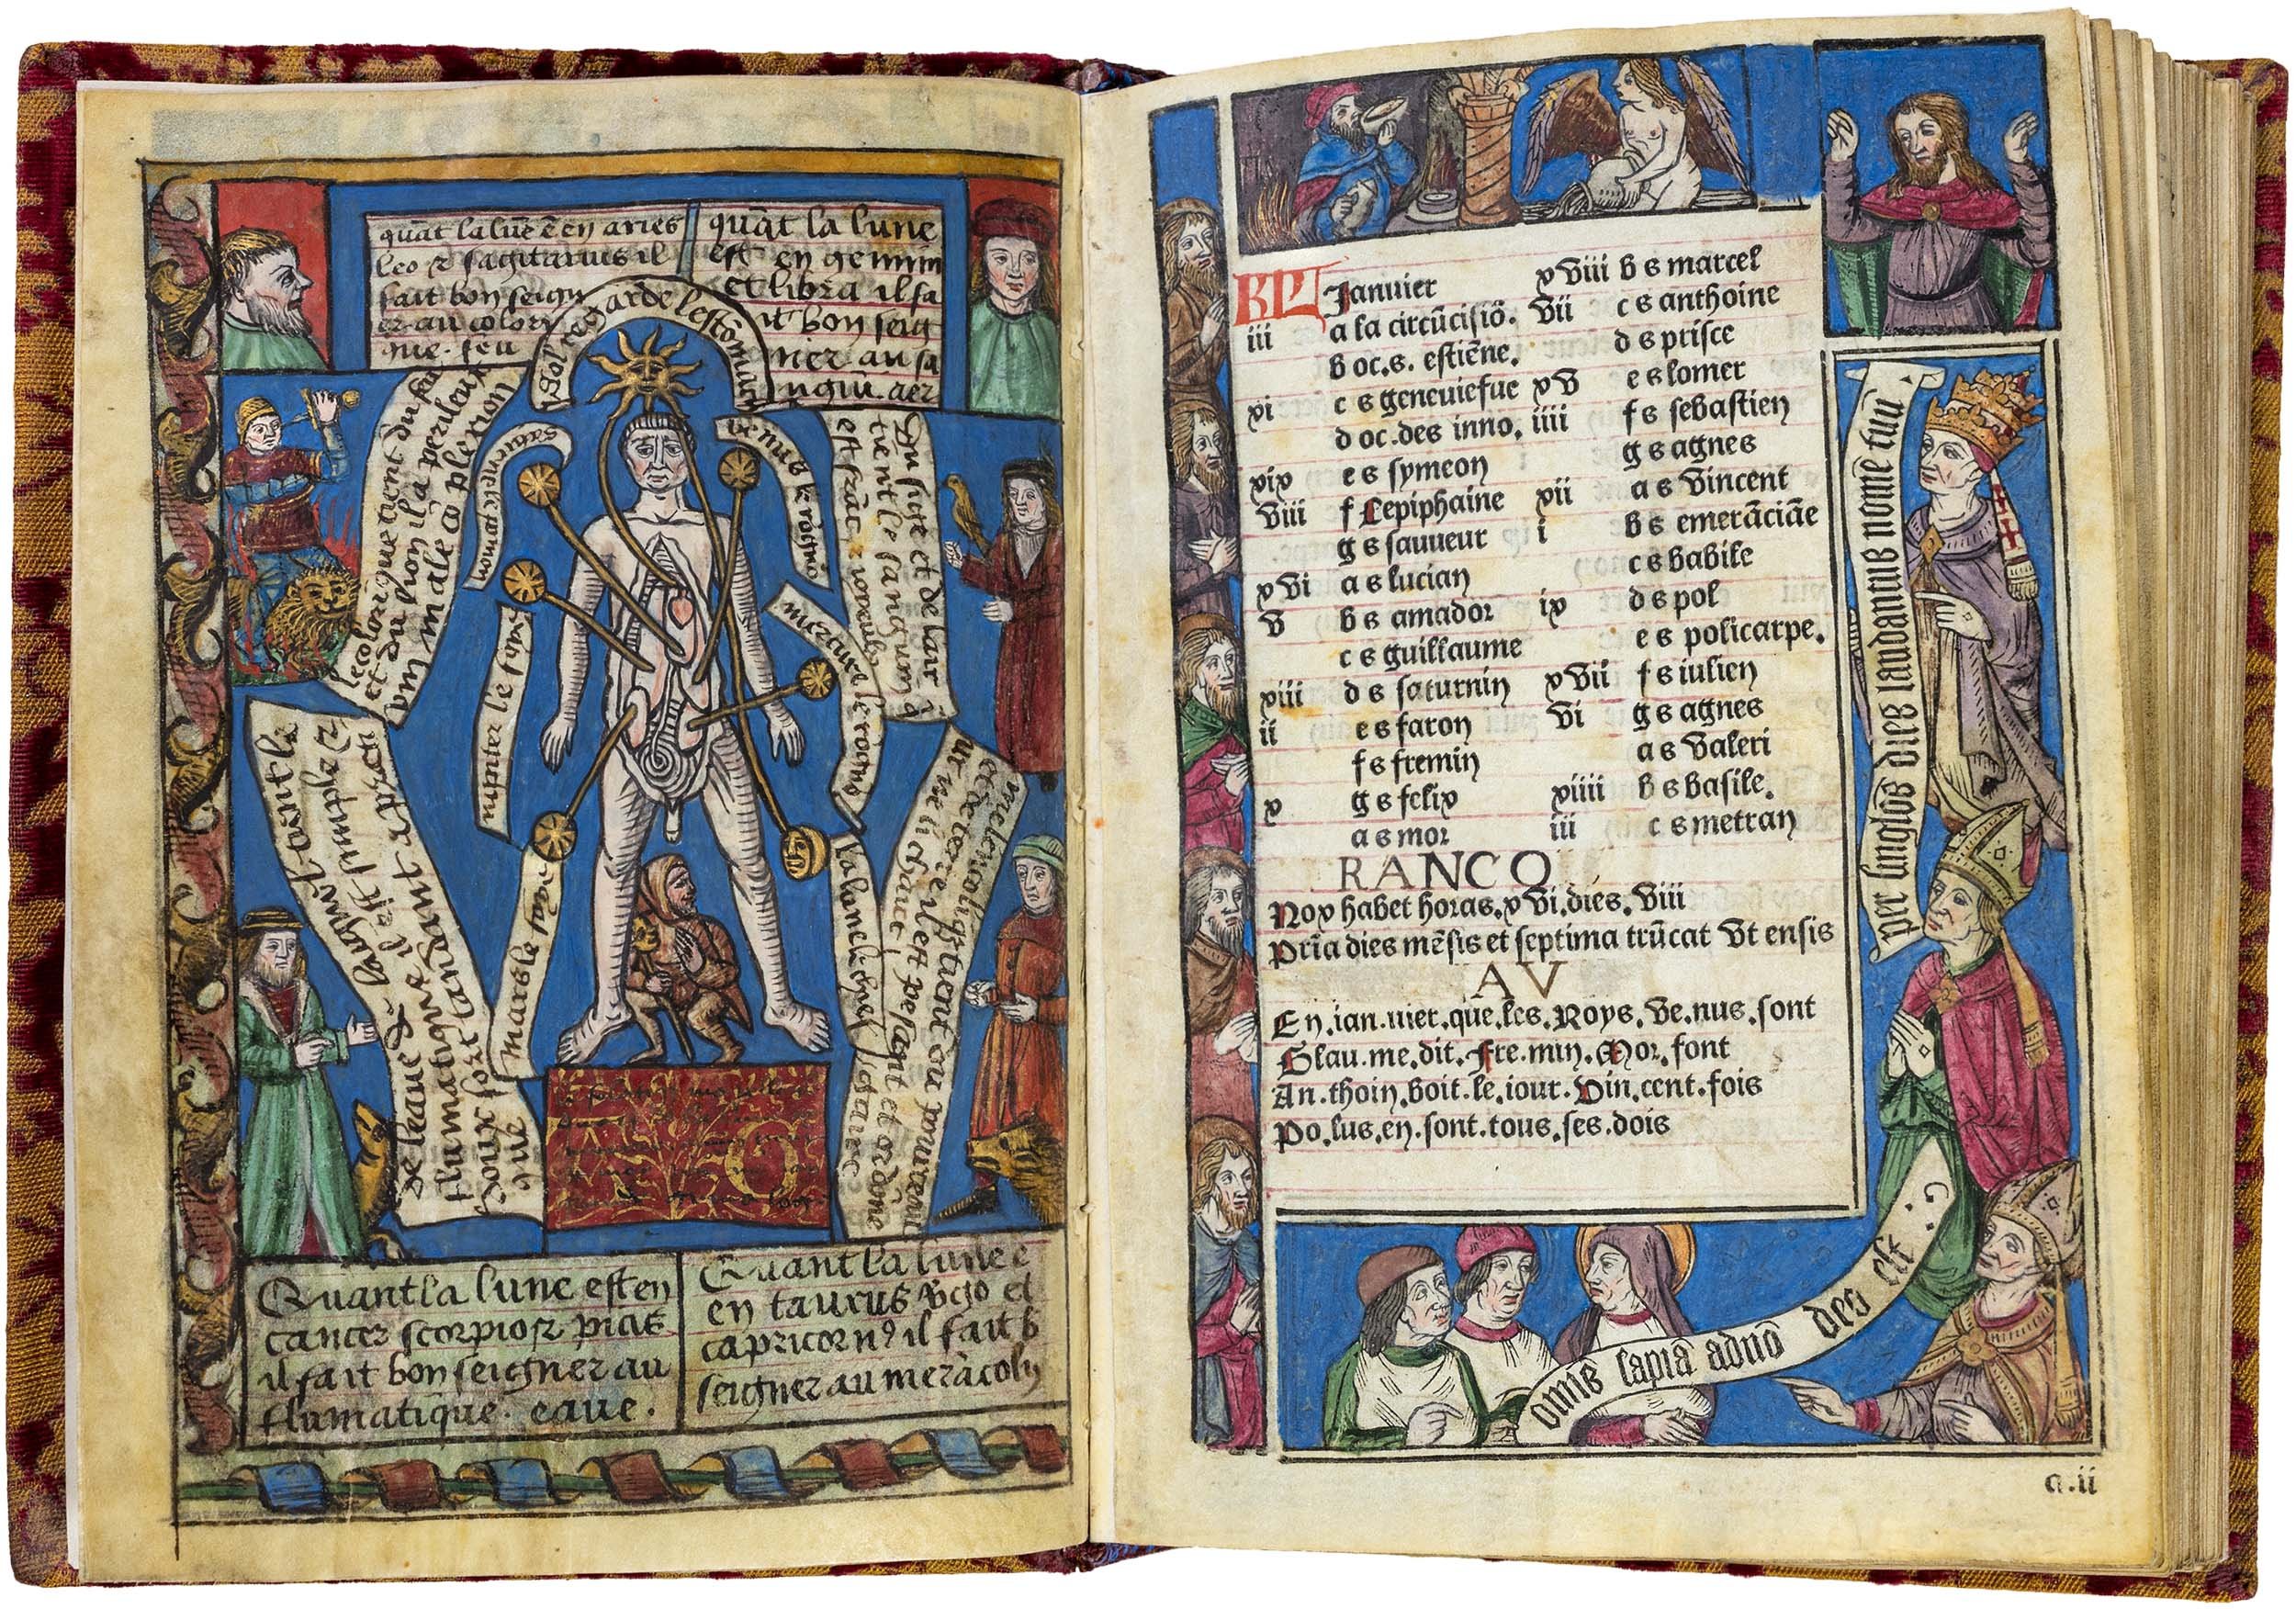 horae-bmv-8.10.1488-dupre-verard-printed-book-of-hours-illuminated-vellum-copy-king-charles-viii-05.jpg